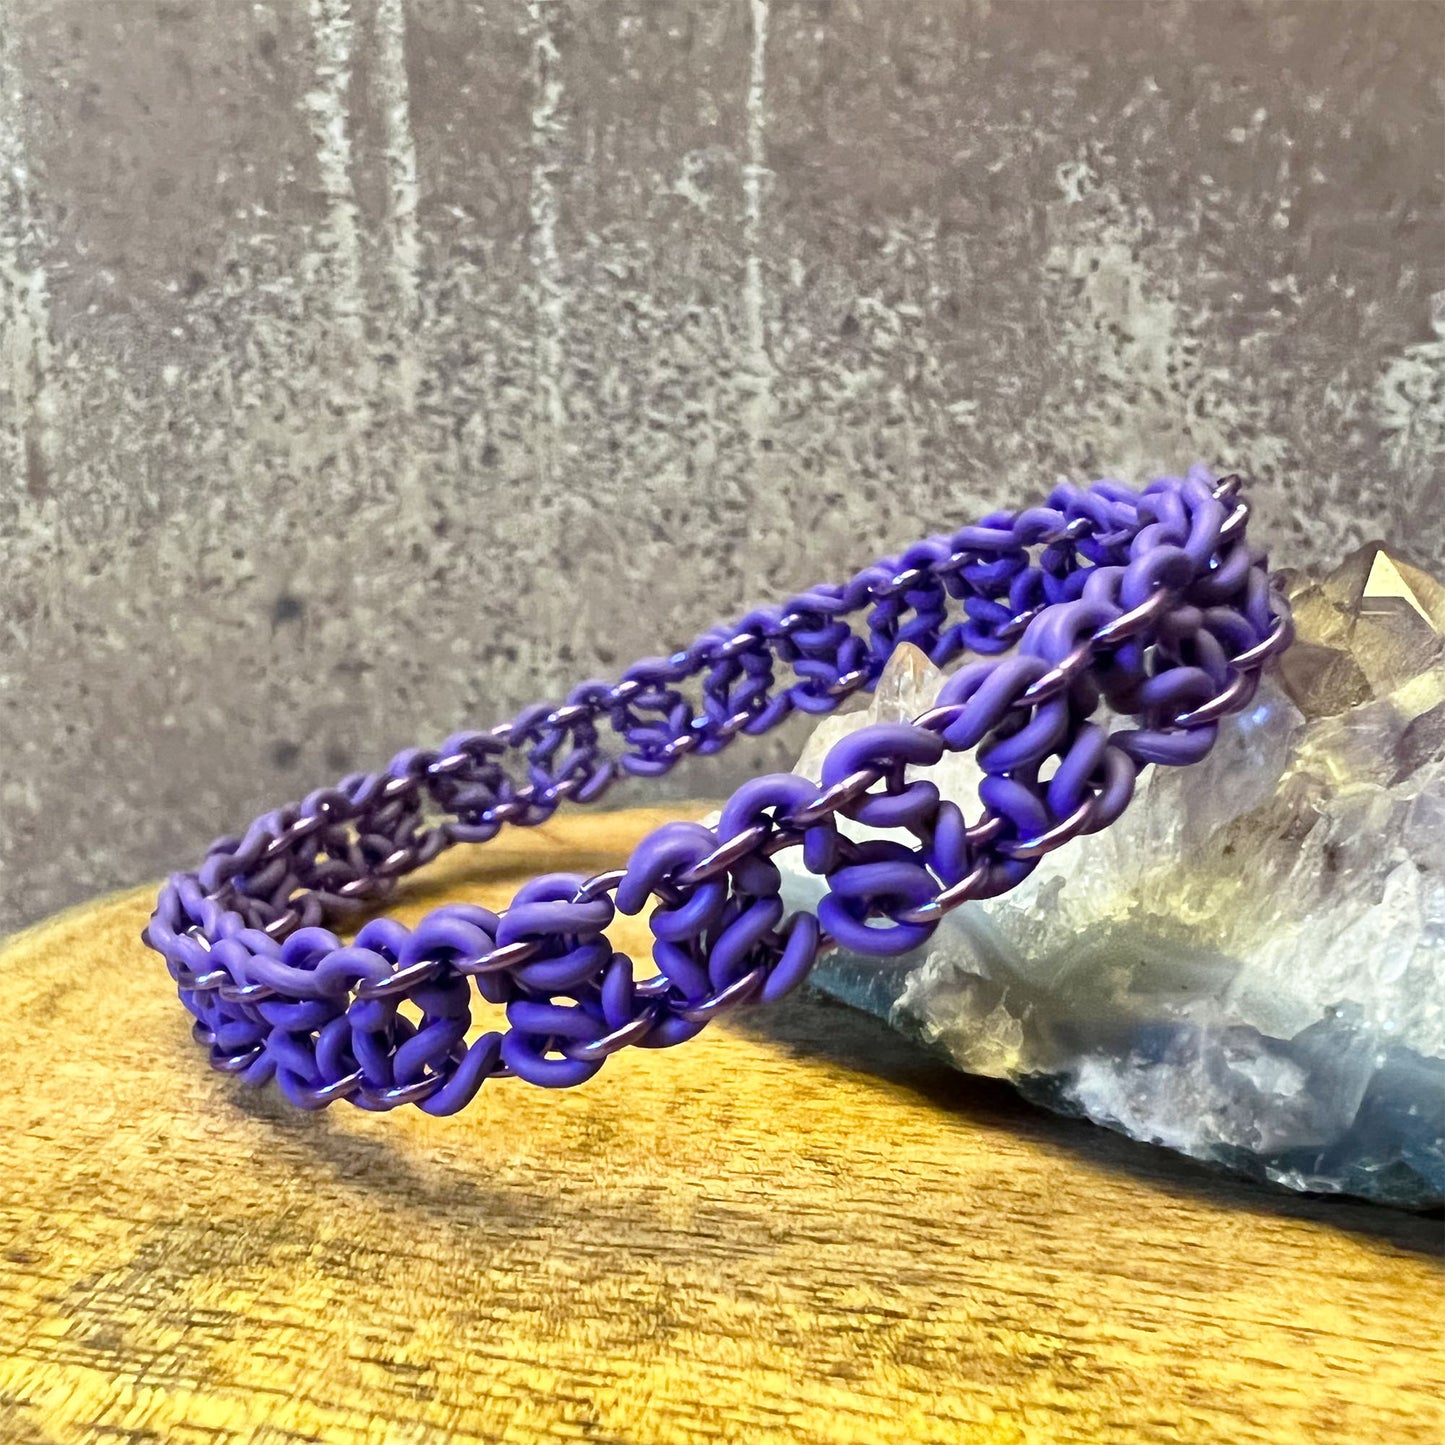 Clover Flower Stretch Bracelet kit with FREE video - Purple